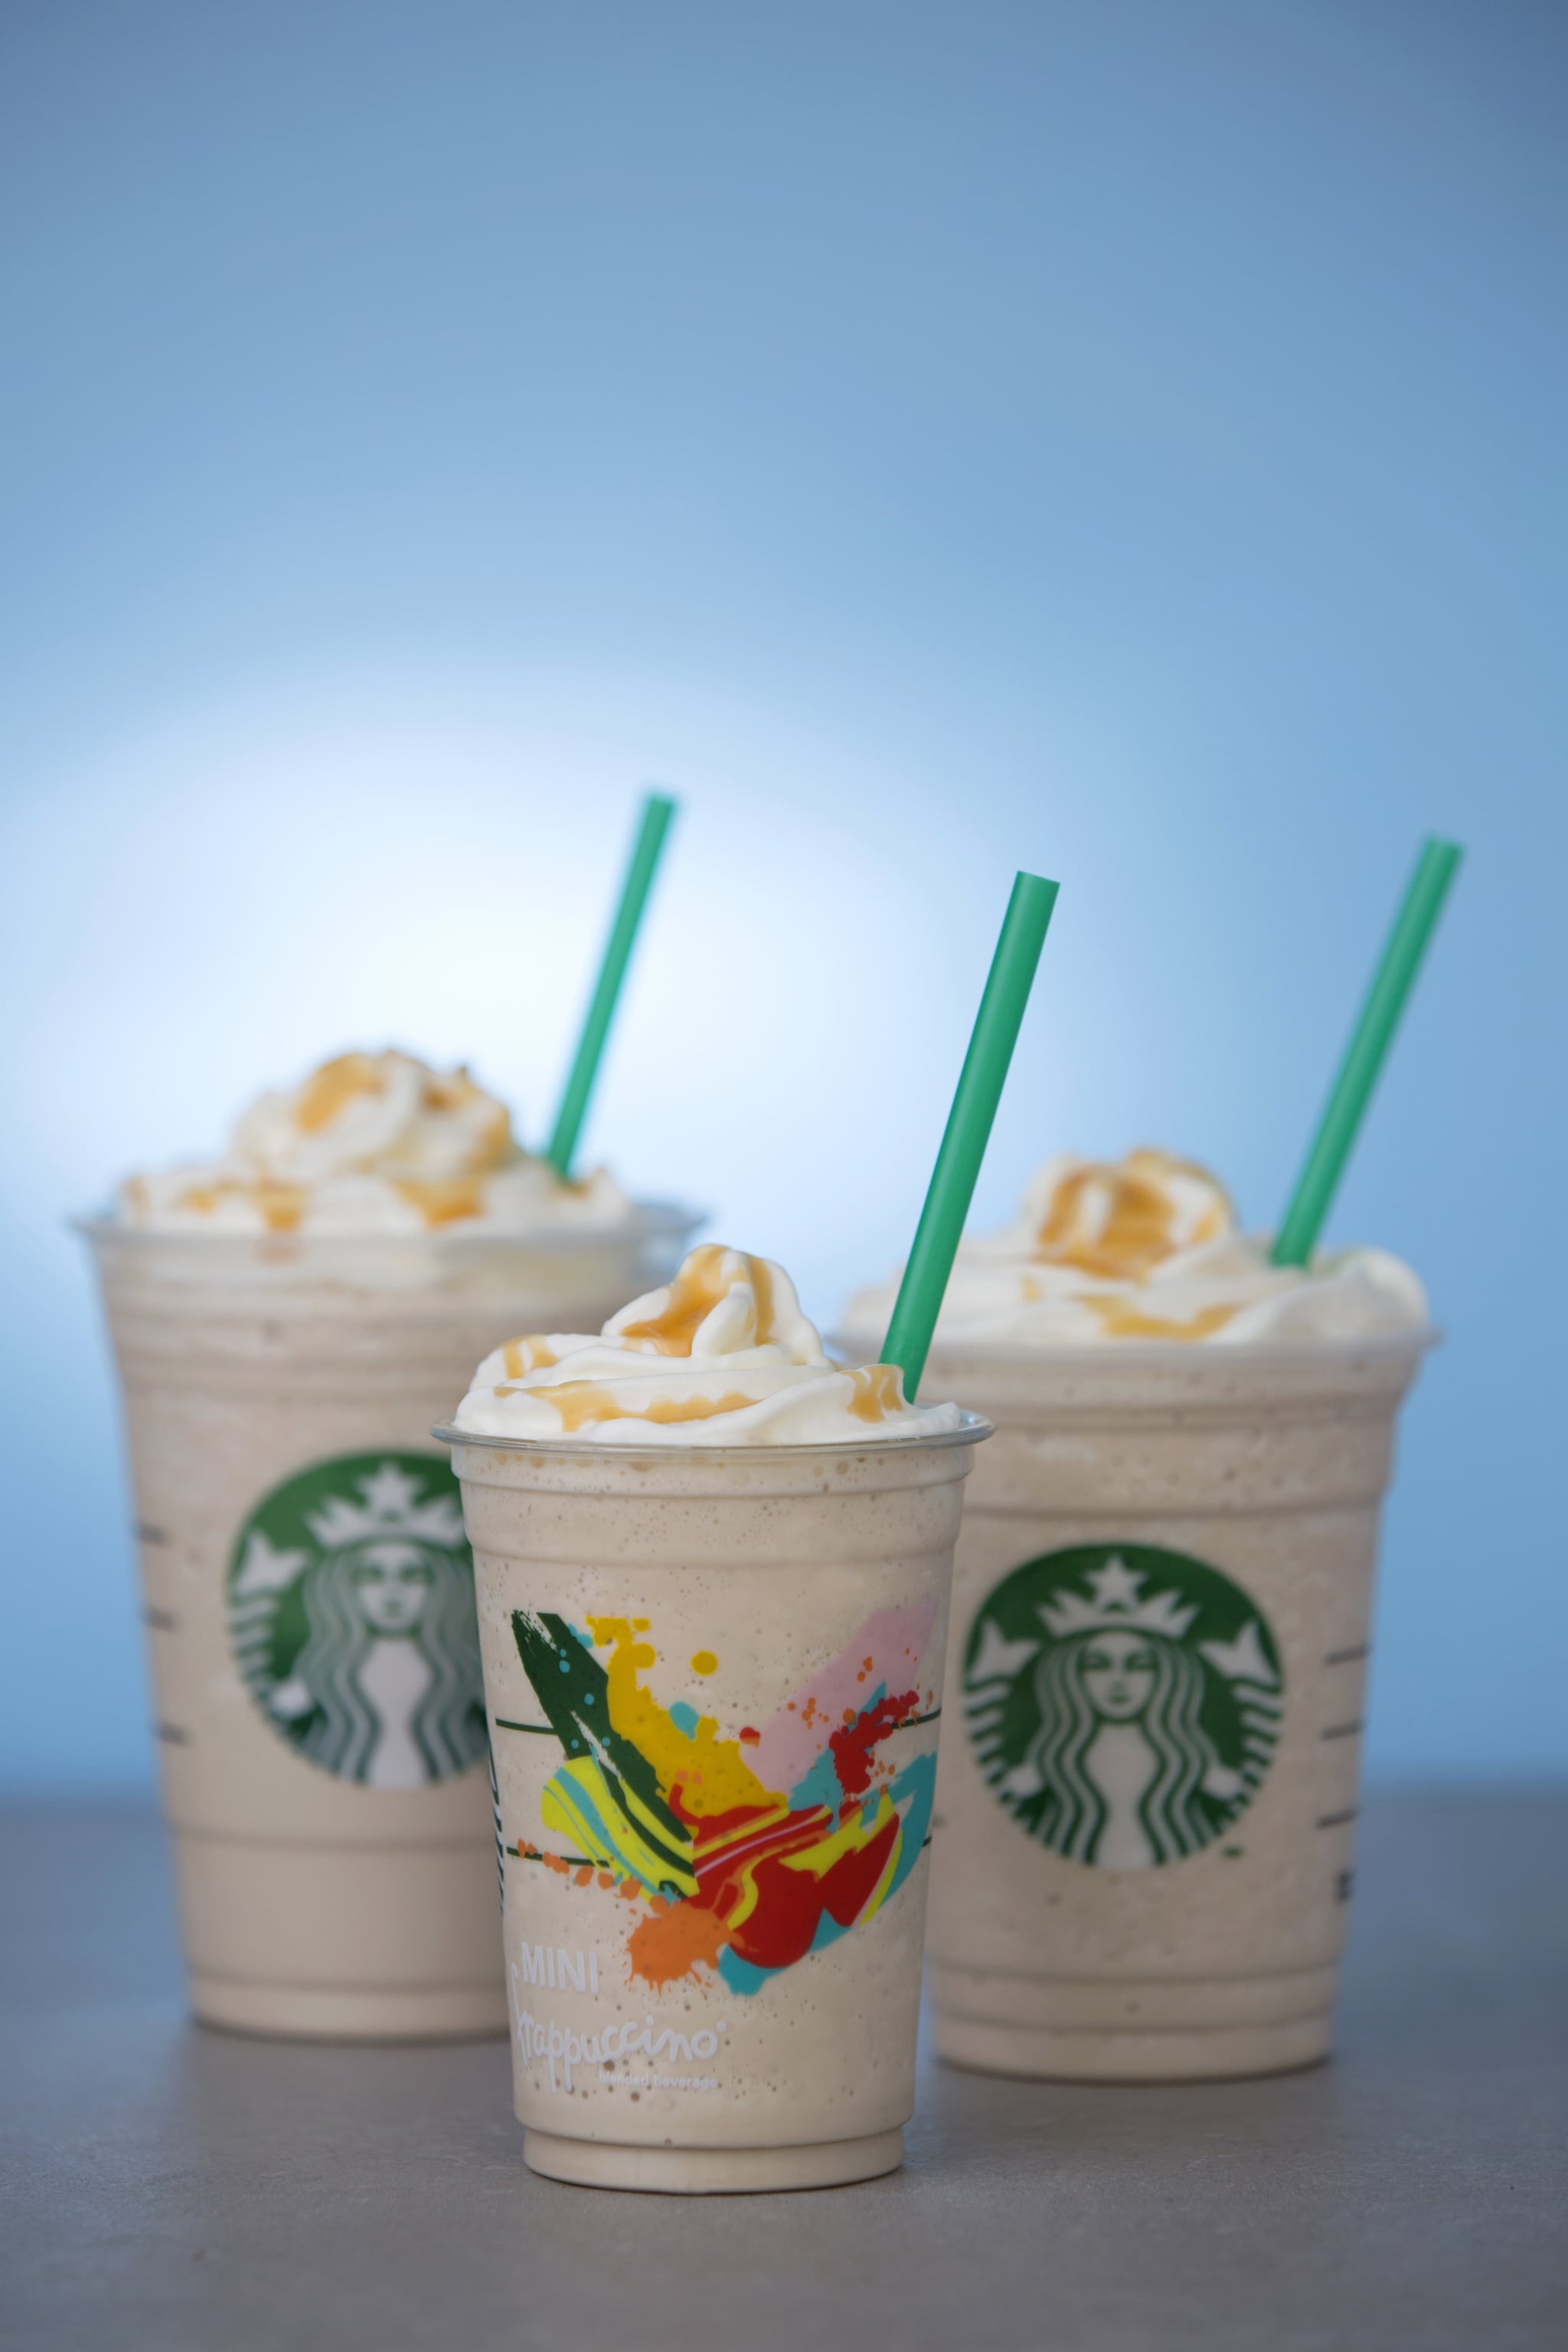 Starbucks Mini Frappuccino Calorie Count Popsugar Fitness,Veiled Chameleon Care